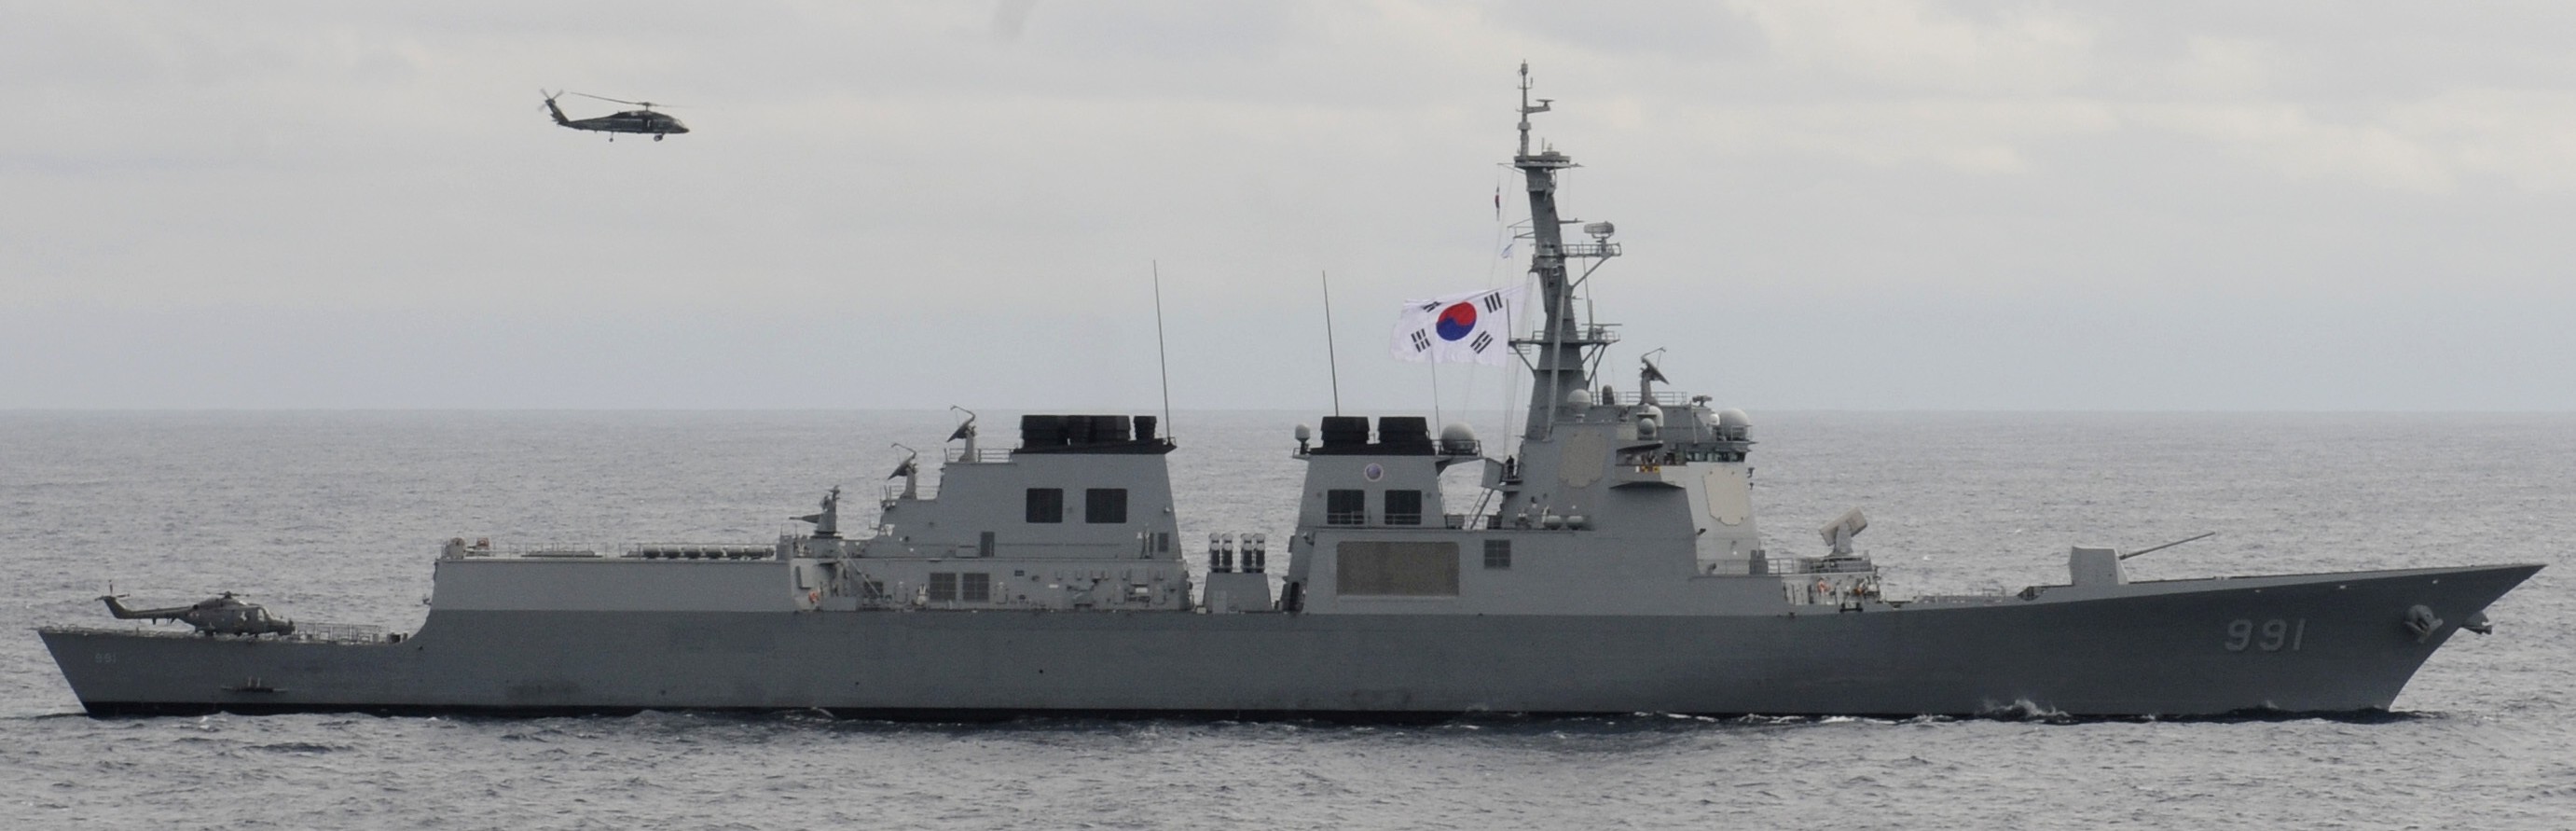 ddg-991 roks sejong the great guided missile destroyer aegis republic of korea navy rok 11